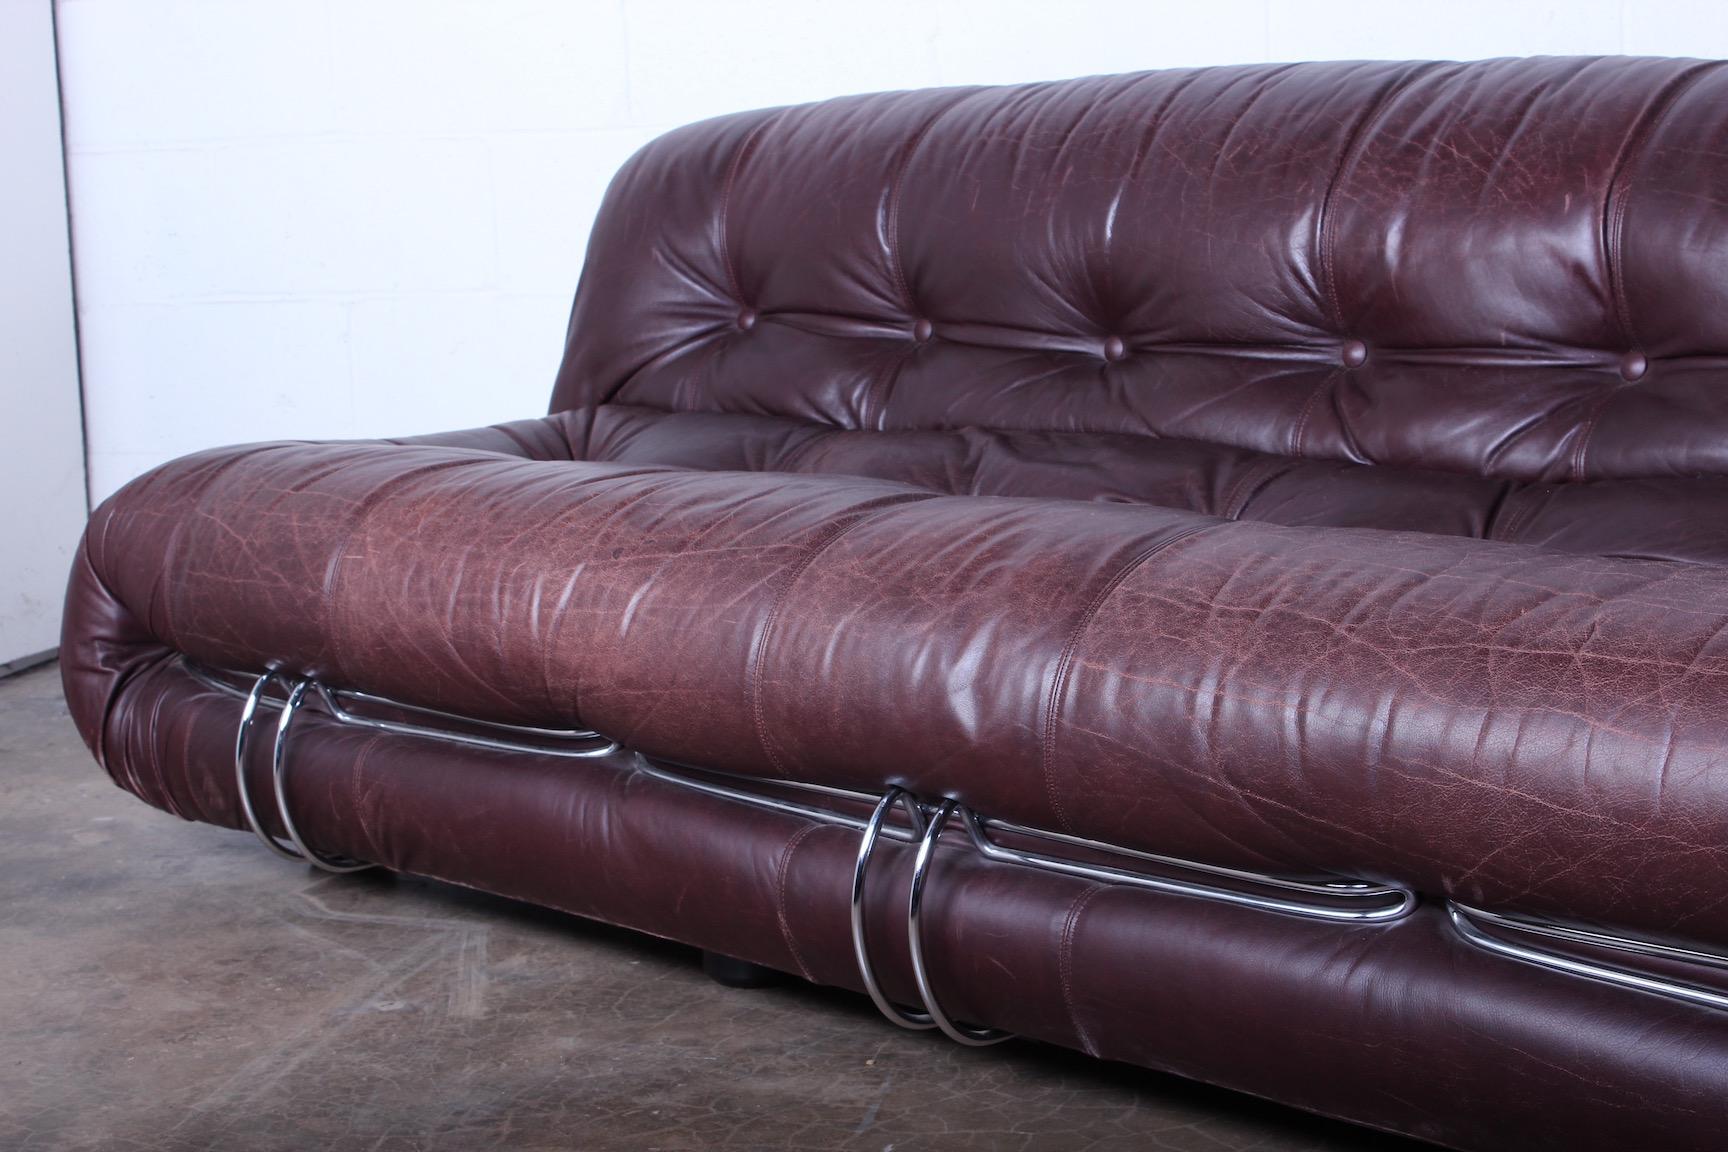 Afra & Tobia Scarpa Soriana Sofa in Patinated Leather 1